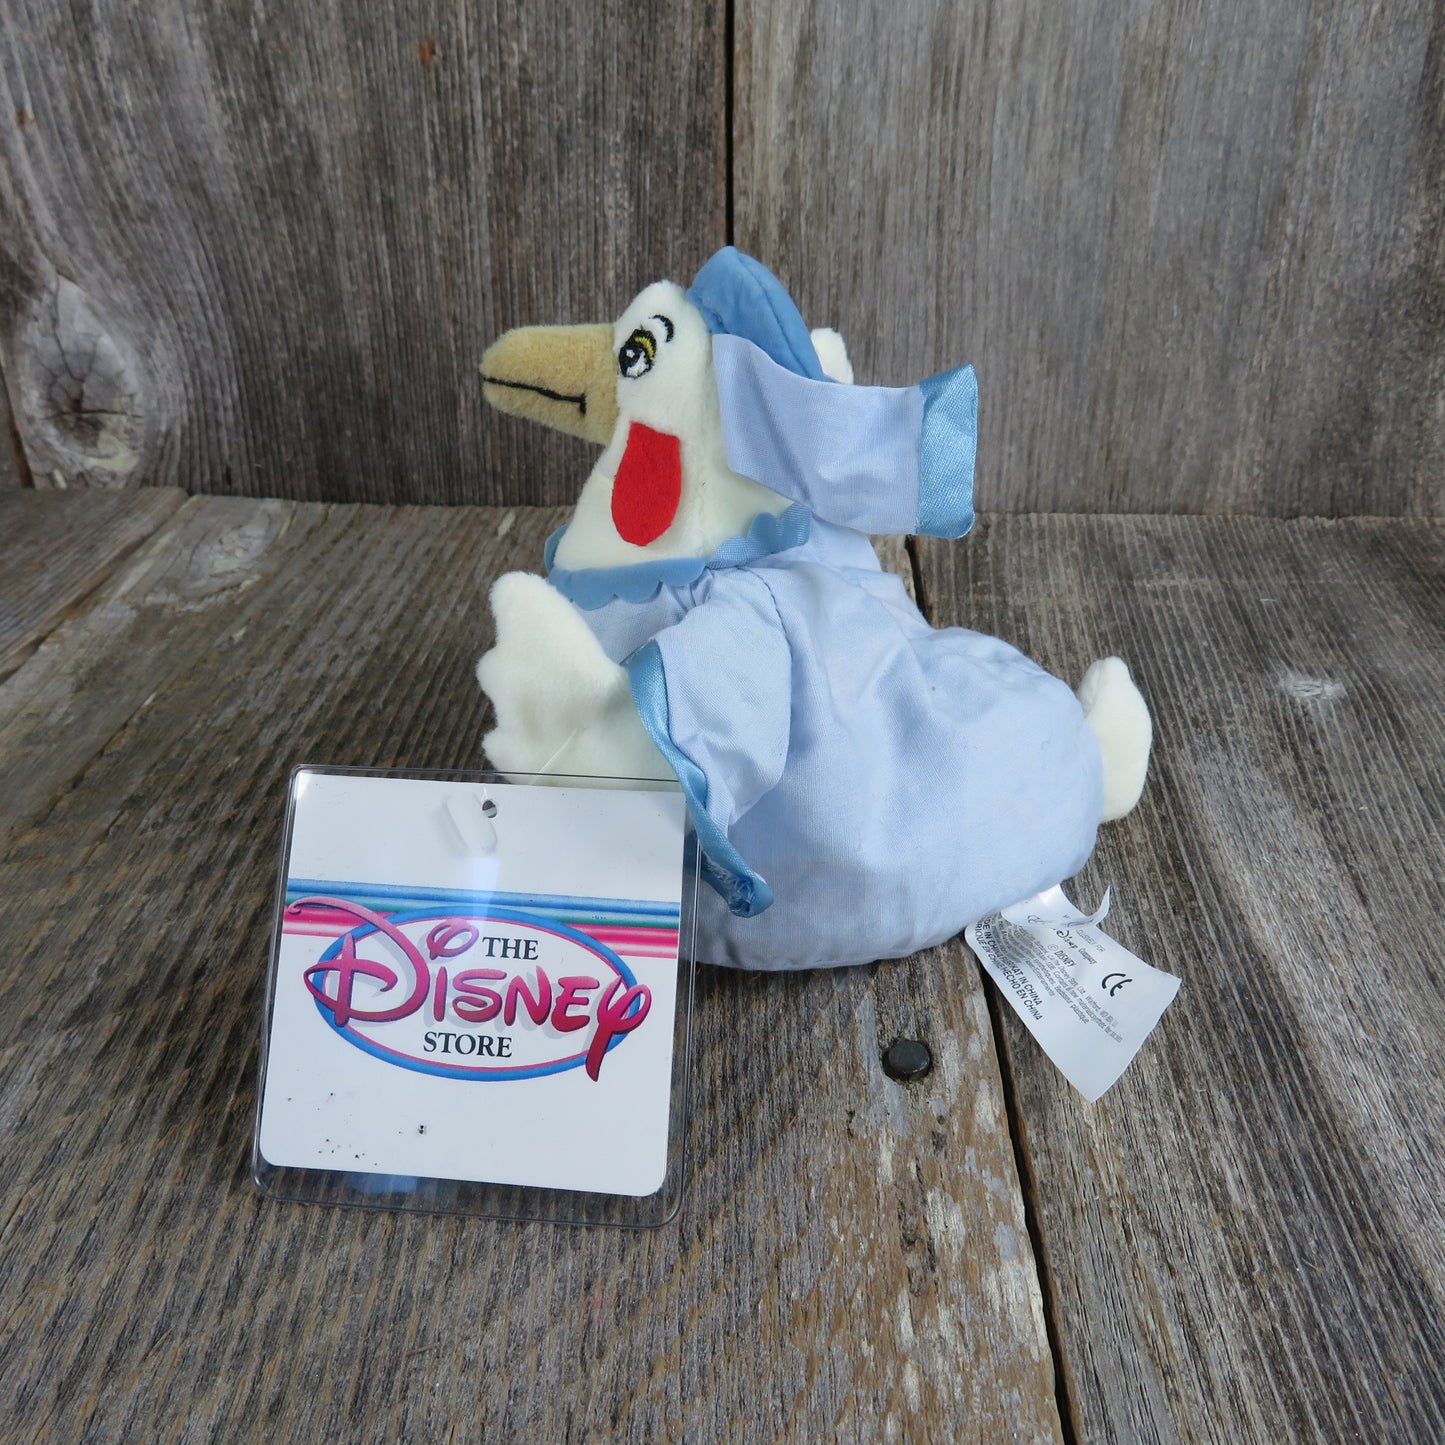 Vintage Lady Kluck Chicken Plush Bean Bag Robin Hood Disney Store Beanie Stuffed Animal 1990s - At Grandma's Table